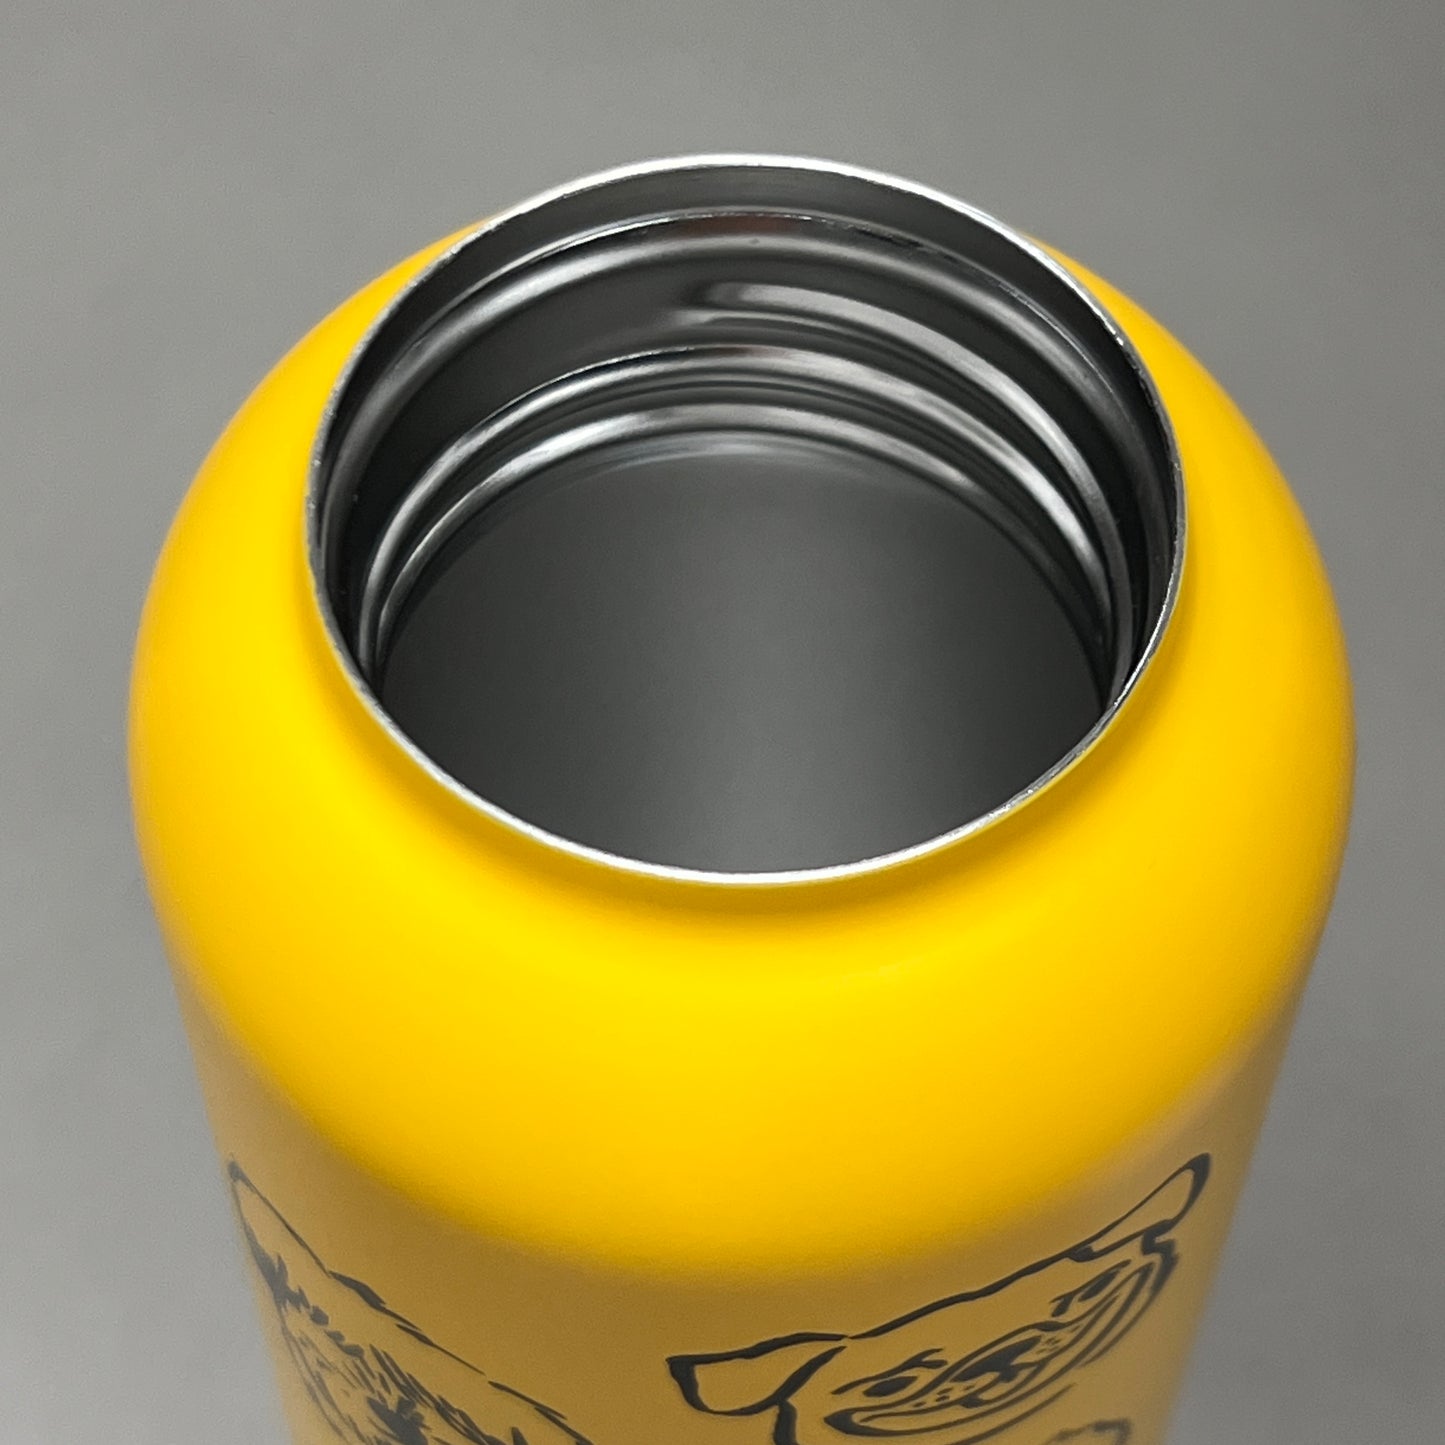 DANICA JUBILEE Dog Park Stainless Steel Water Bottle 18 oz/ 530 mL Yellow 5122021 (New)